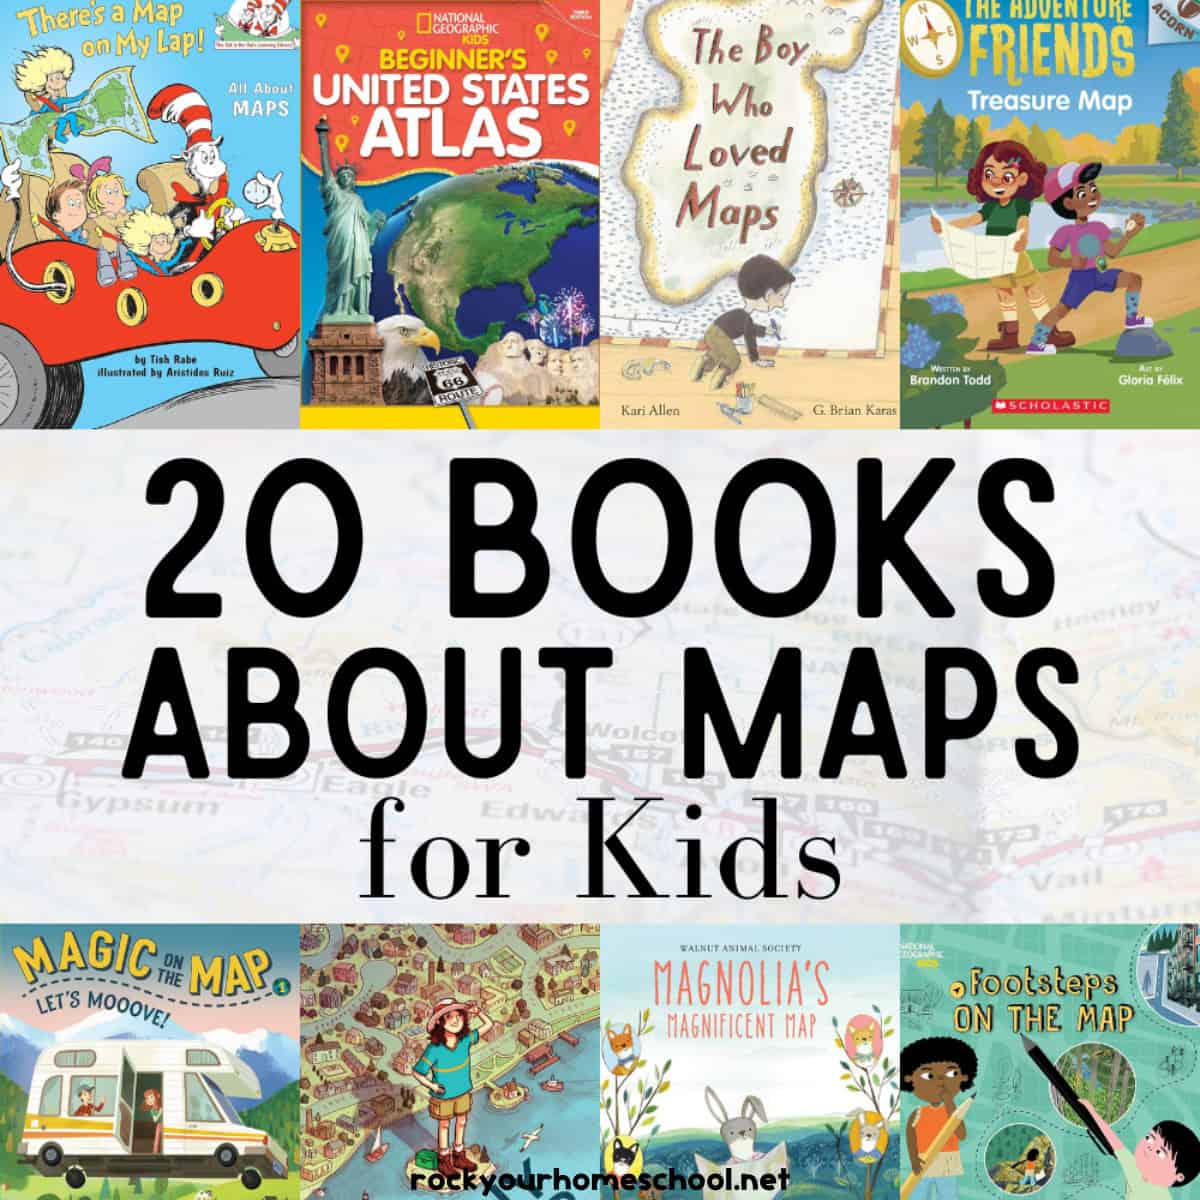 Books About Maps: 20 Amazing Ways to Make Geography Fun